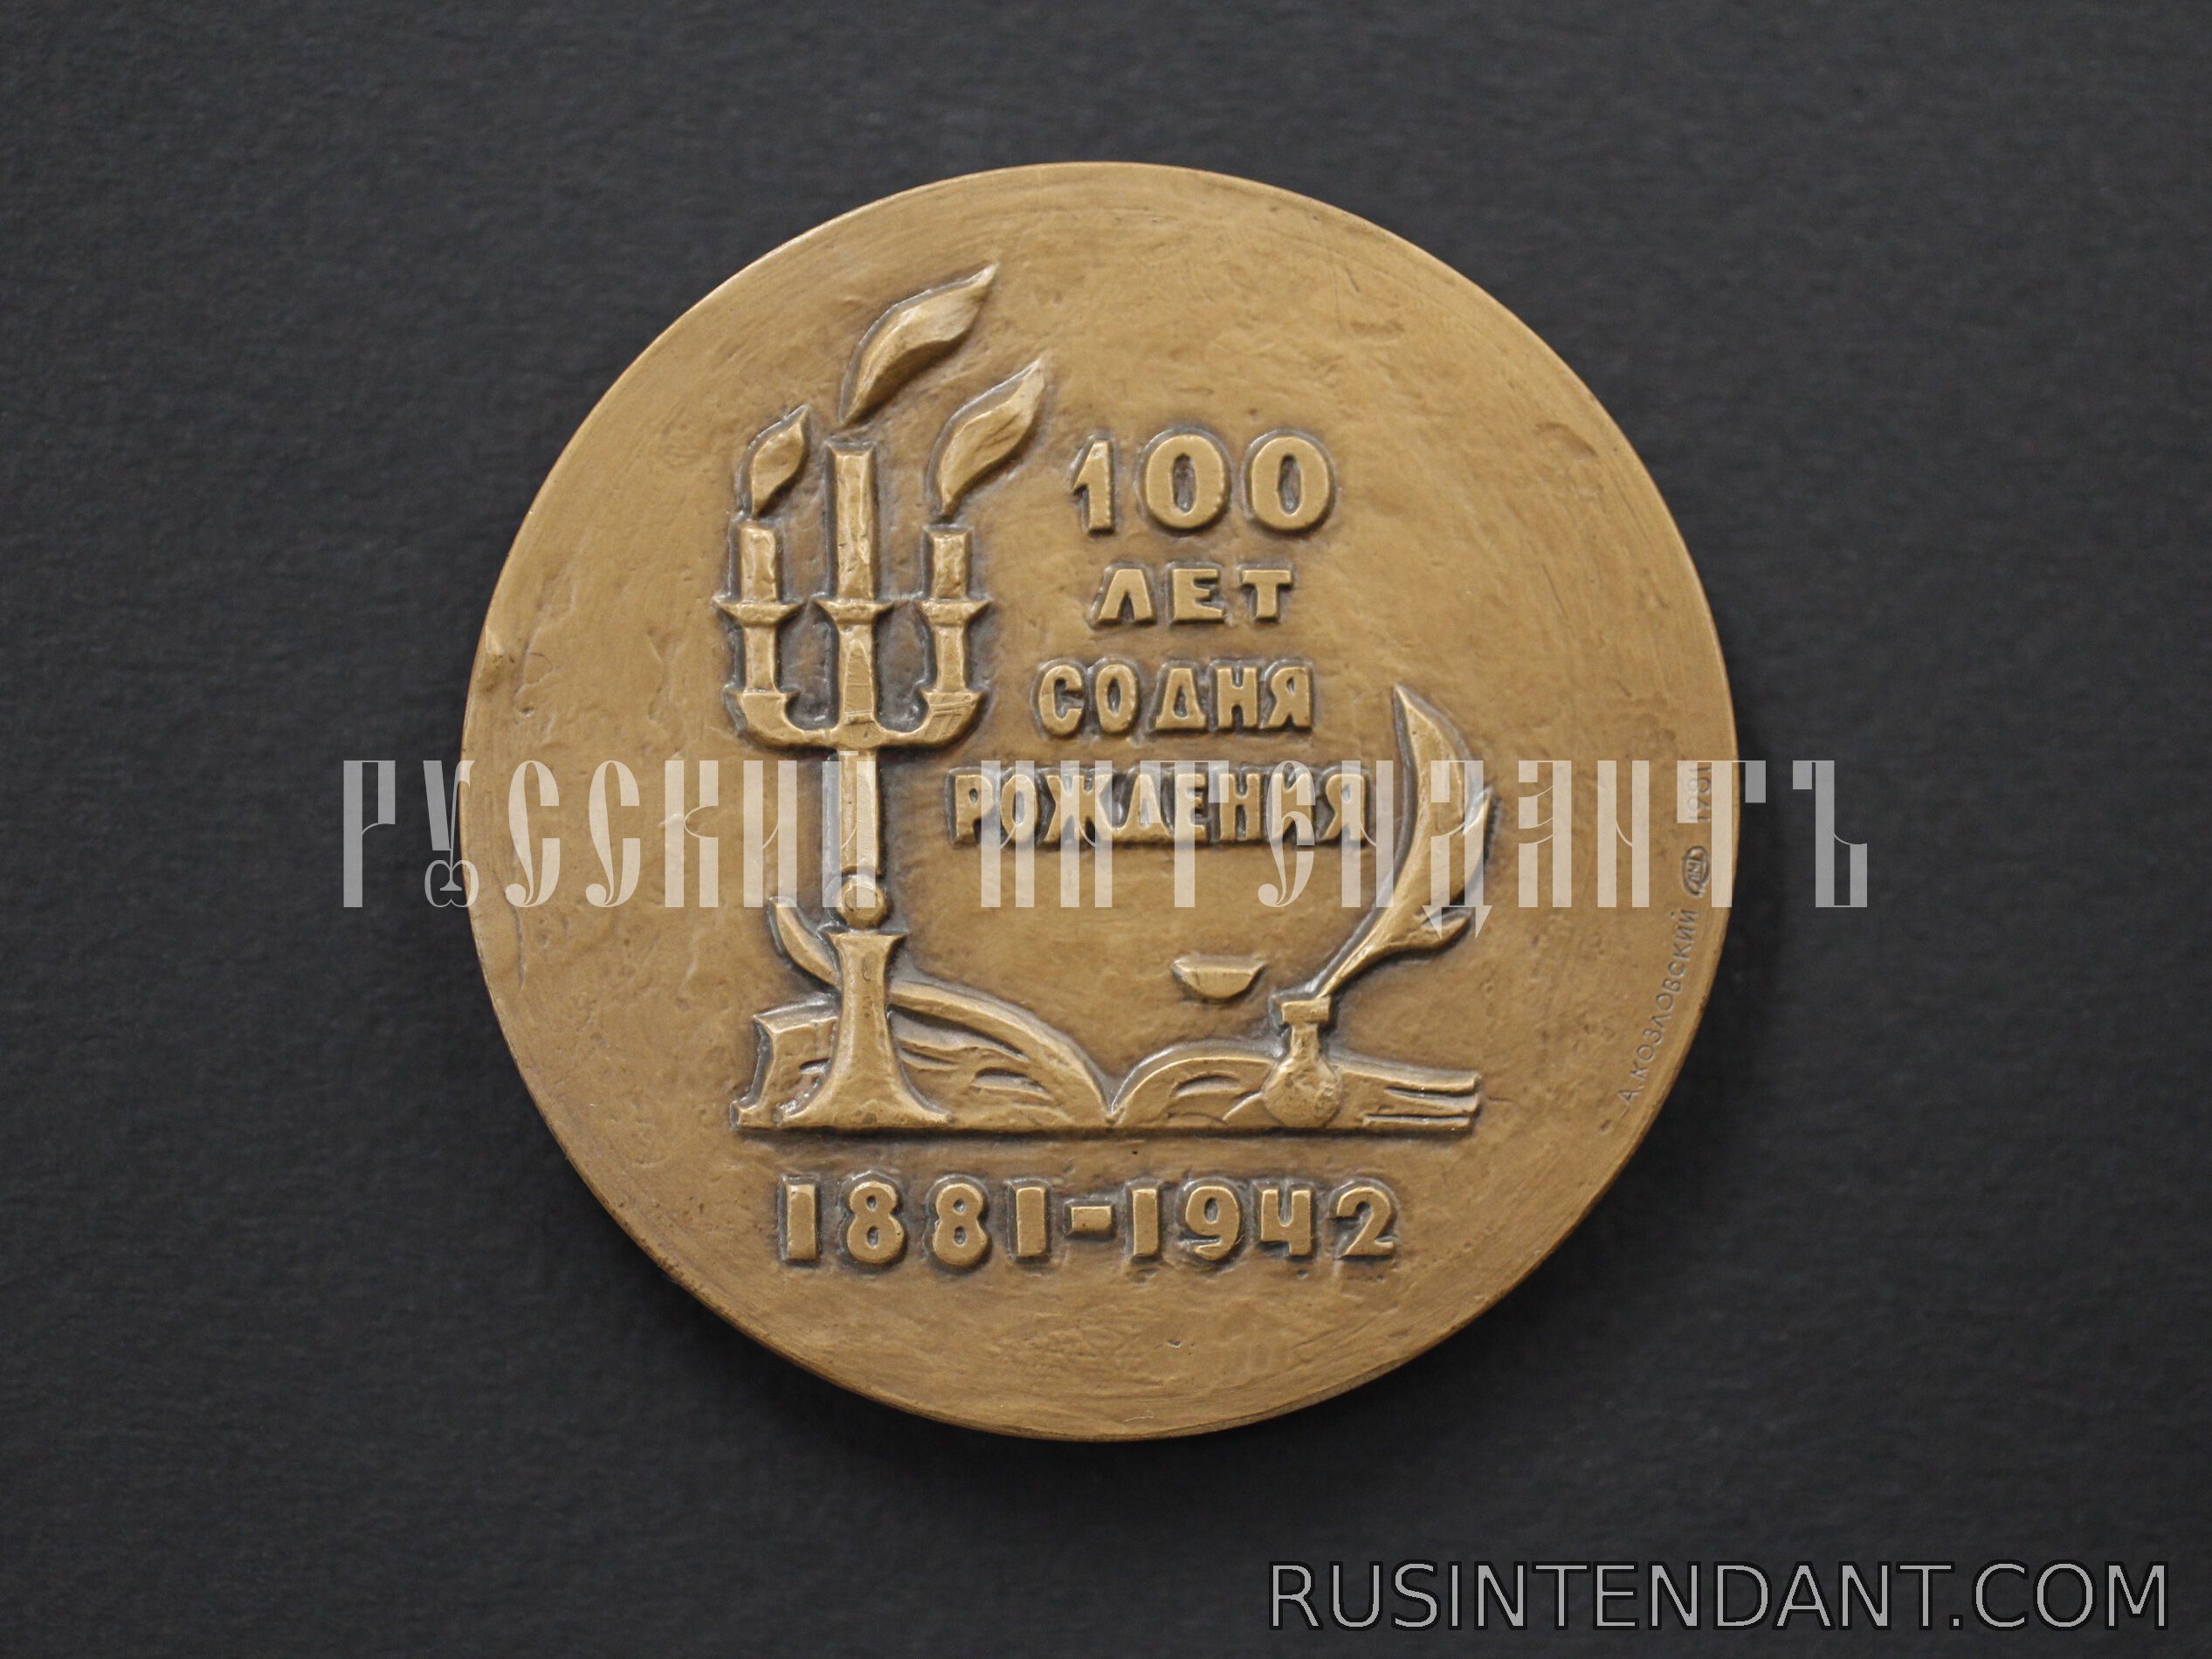 Фото 2: Настольная медаль «Стефан Цвейг» 